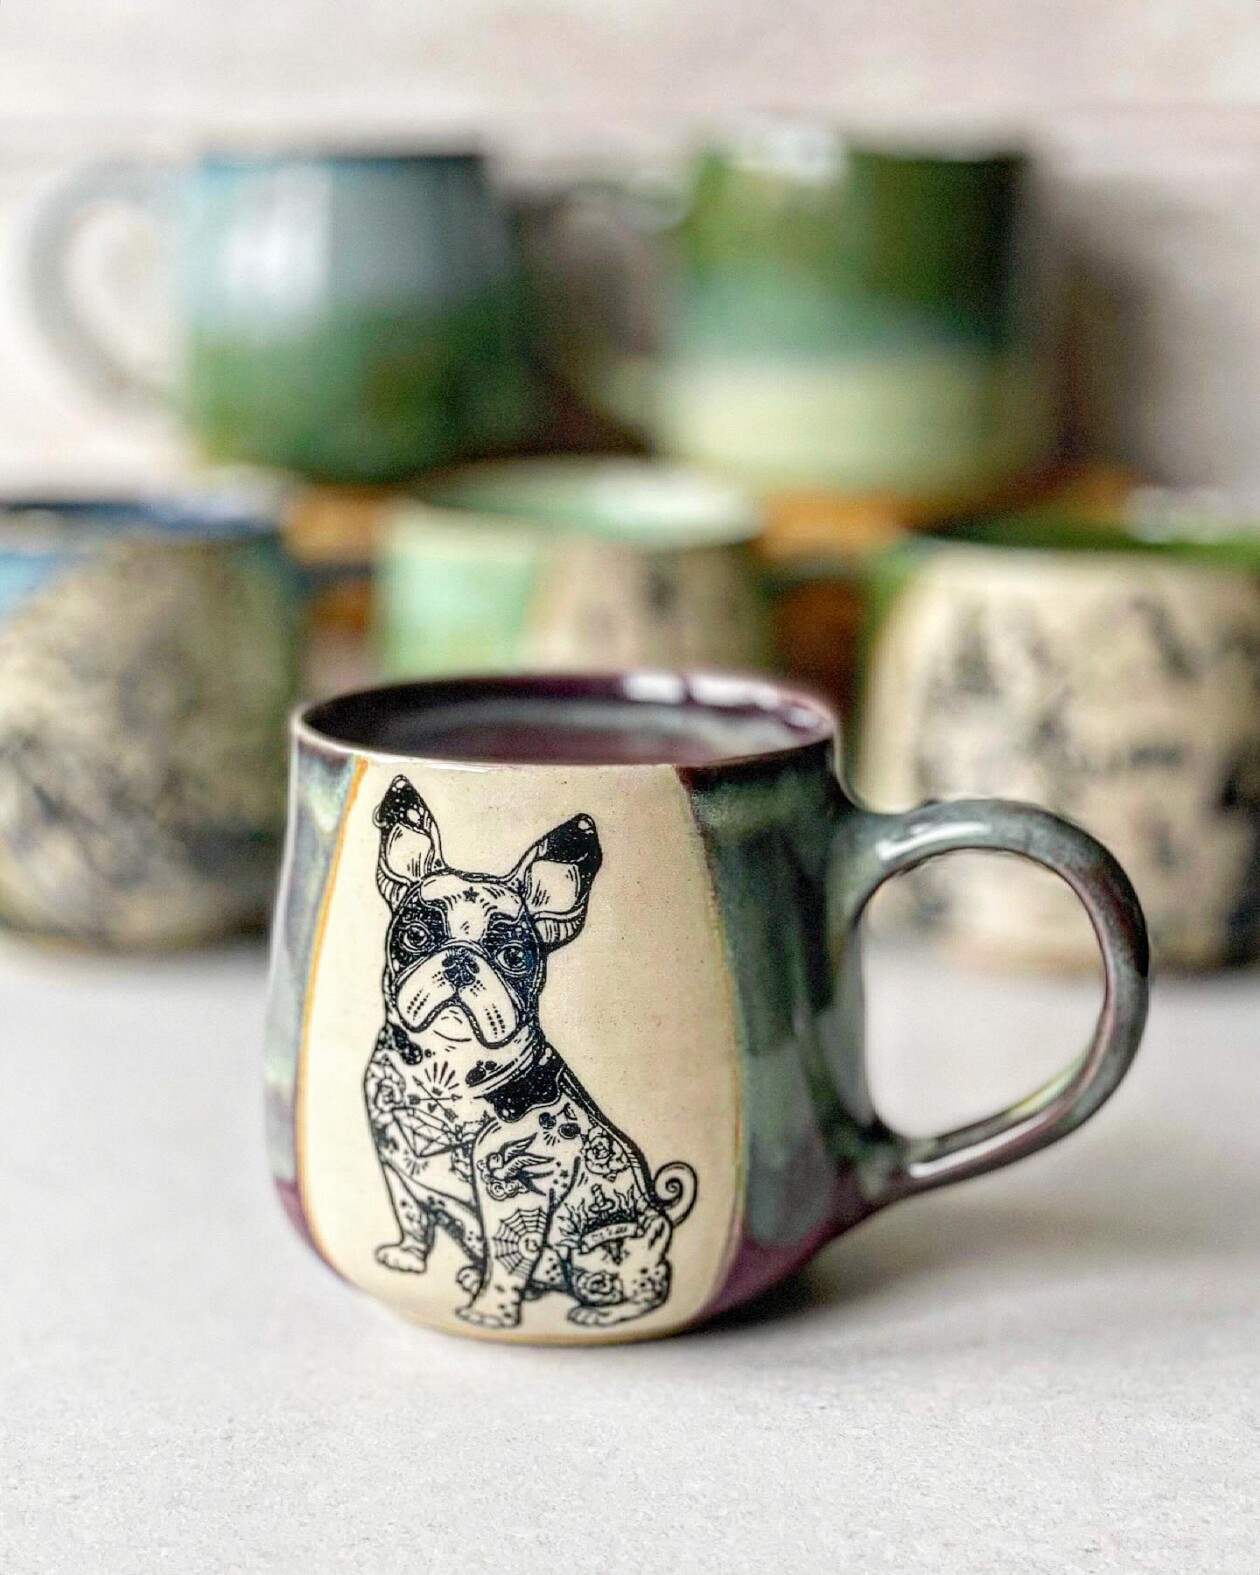 Ceramics With Vintage Motifs By Joanna Dylowska (18)